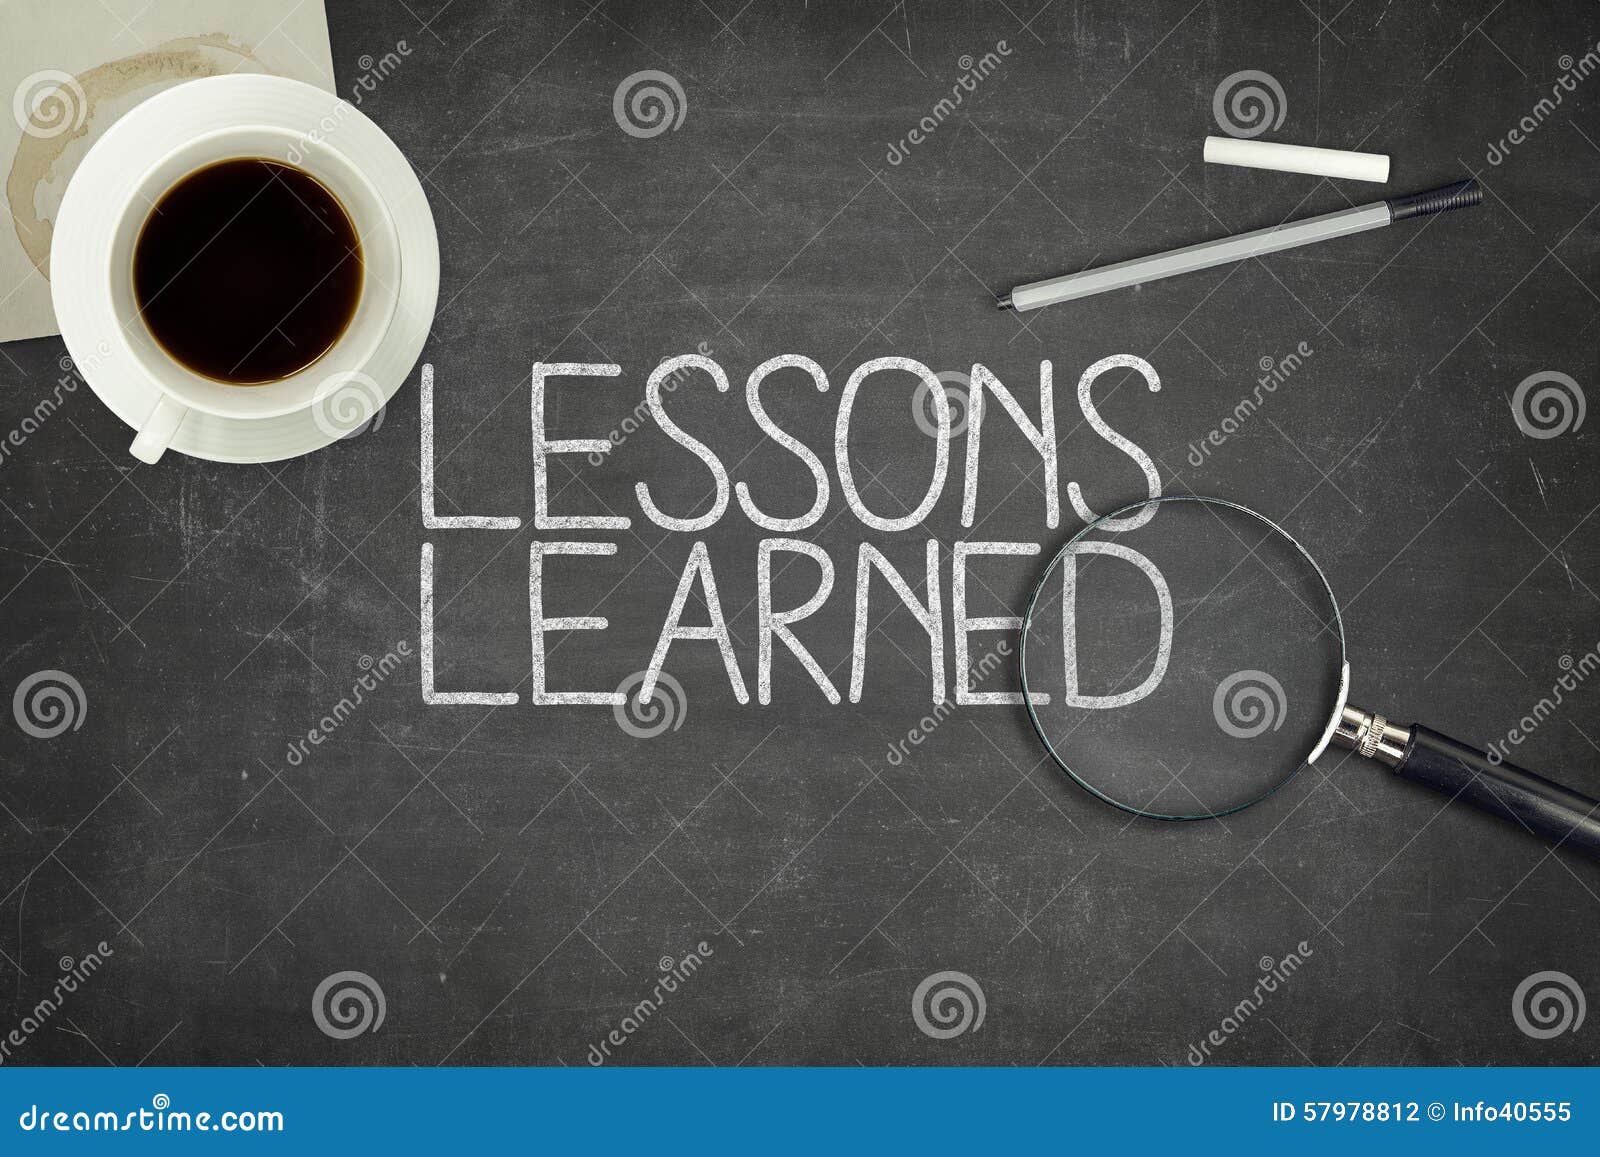 lessons learned concept on black blackboard